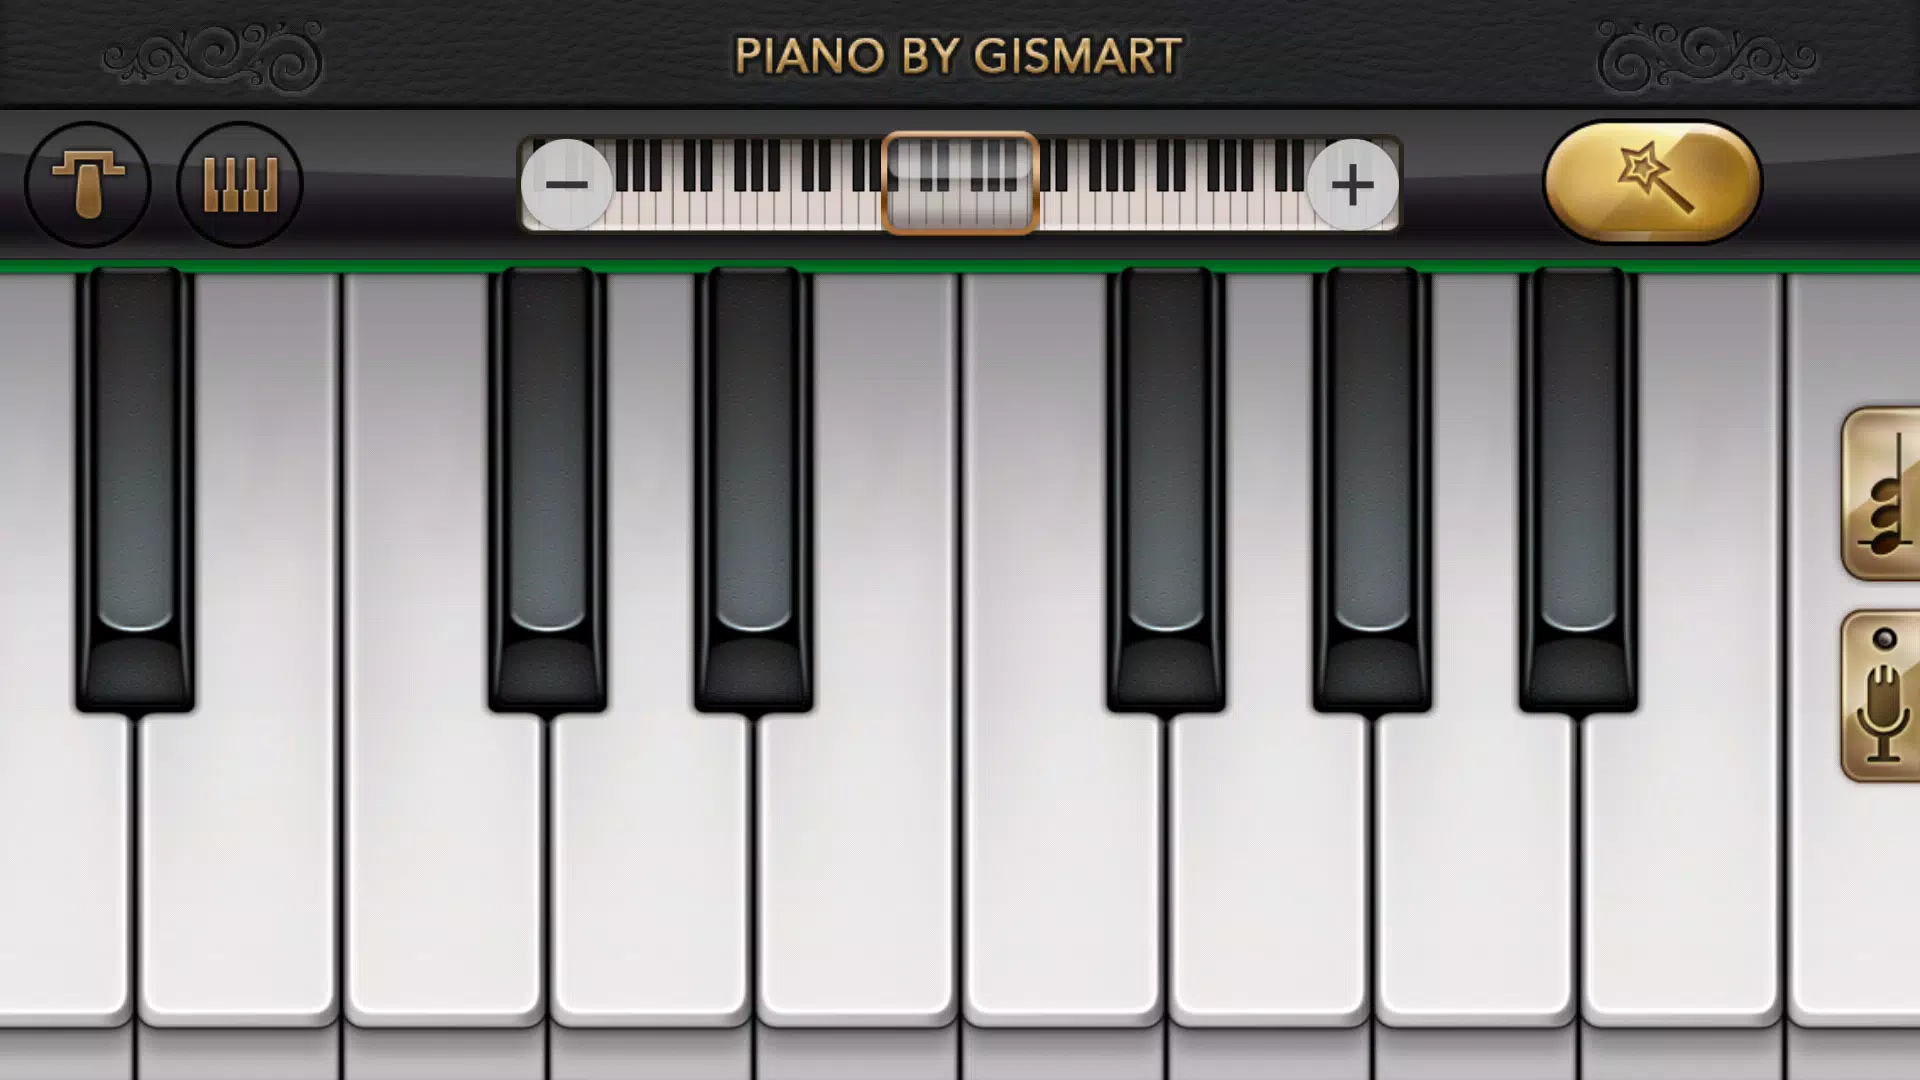 Gismart’s Piano